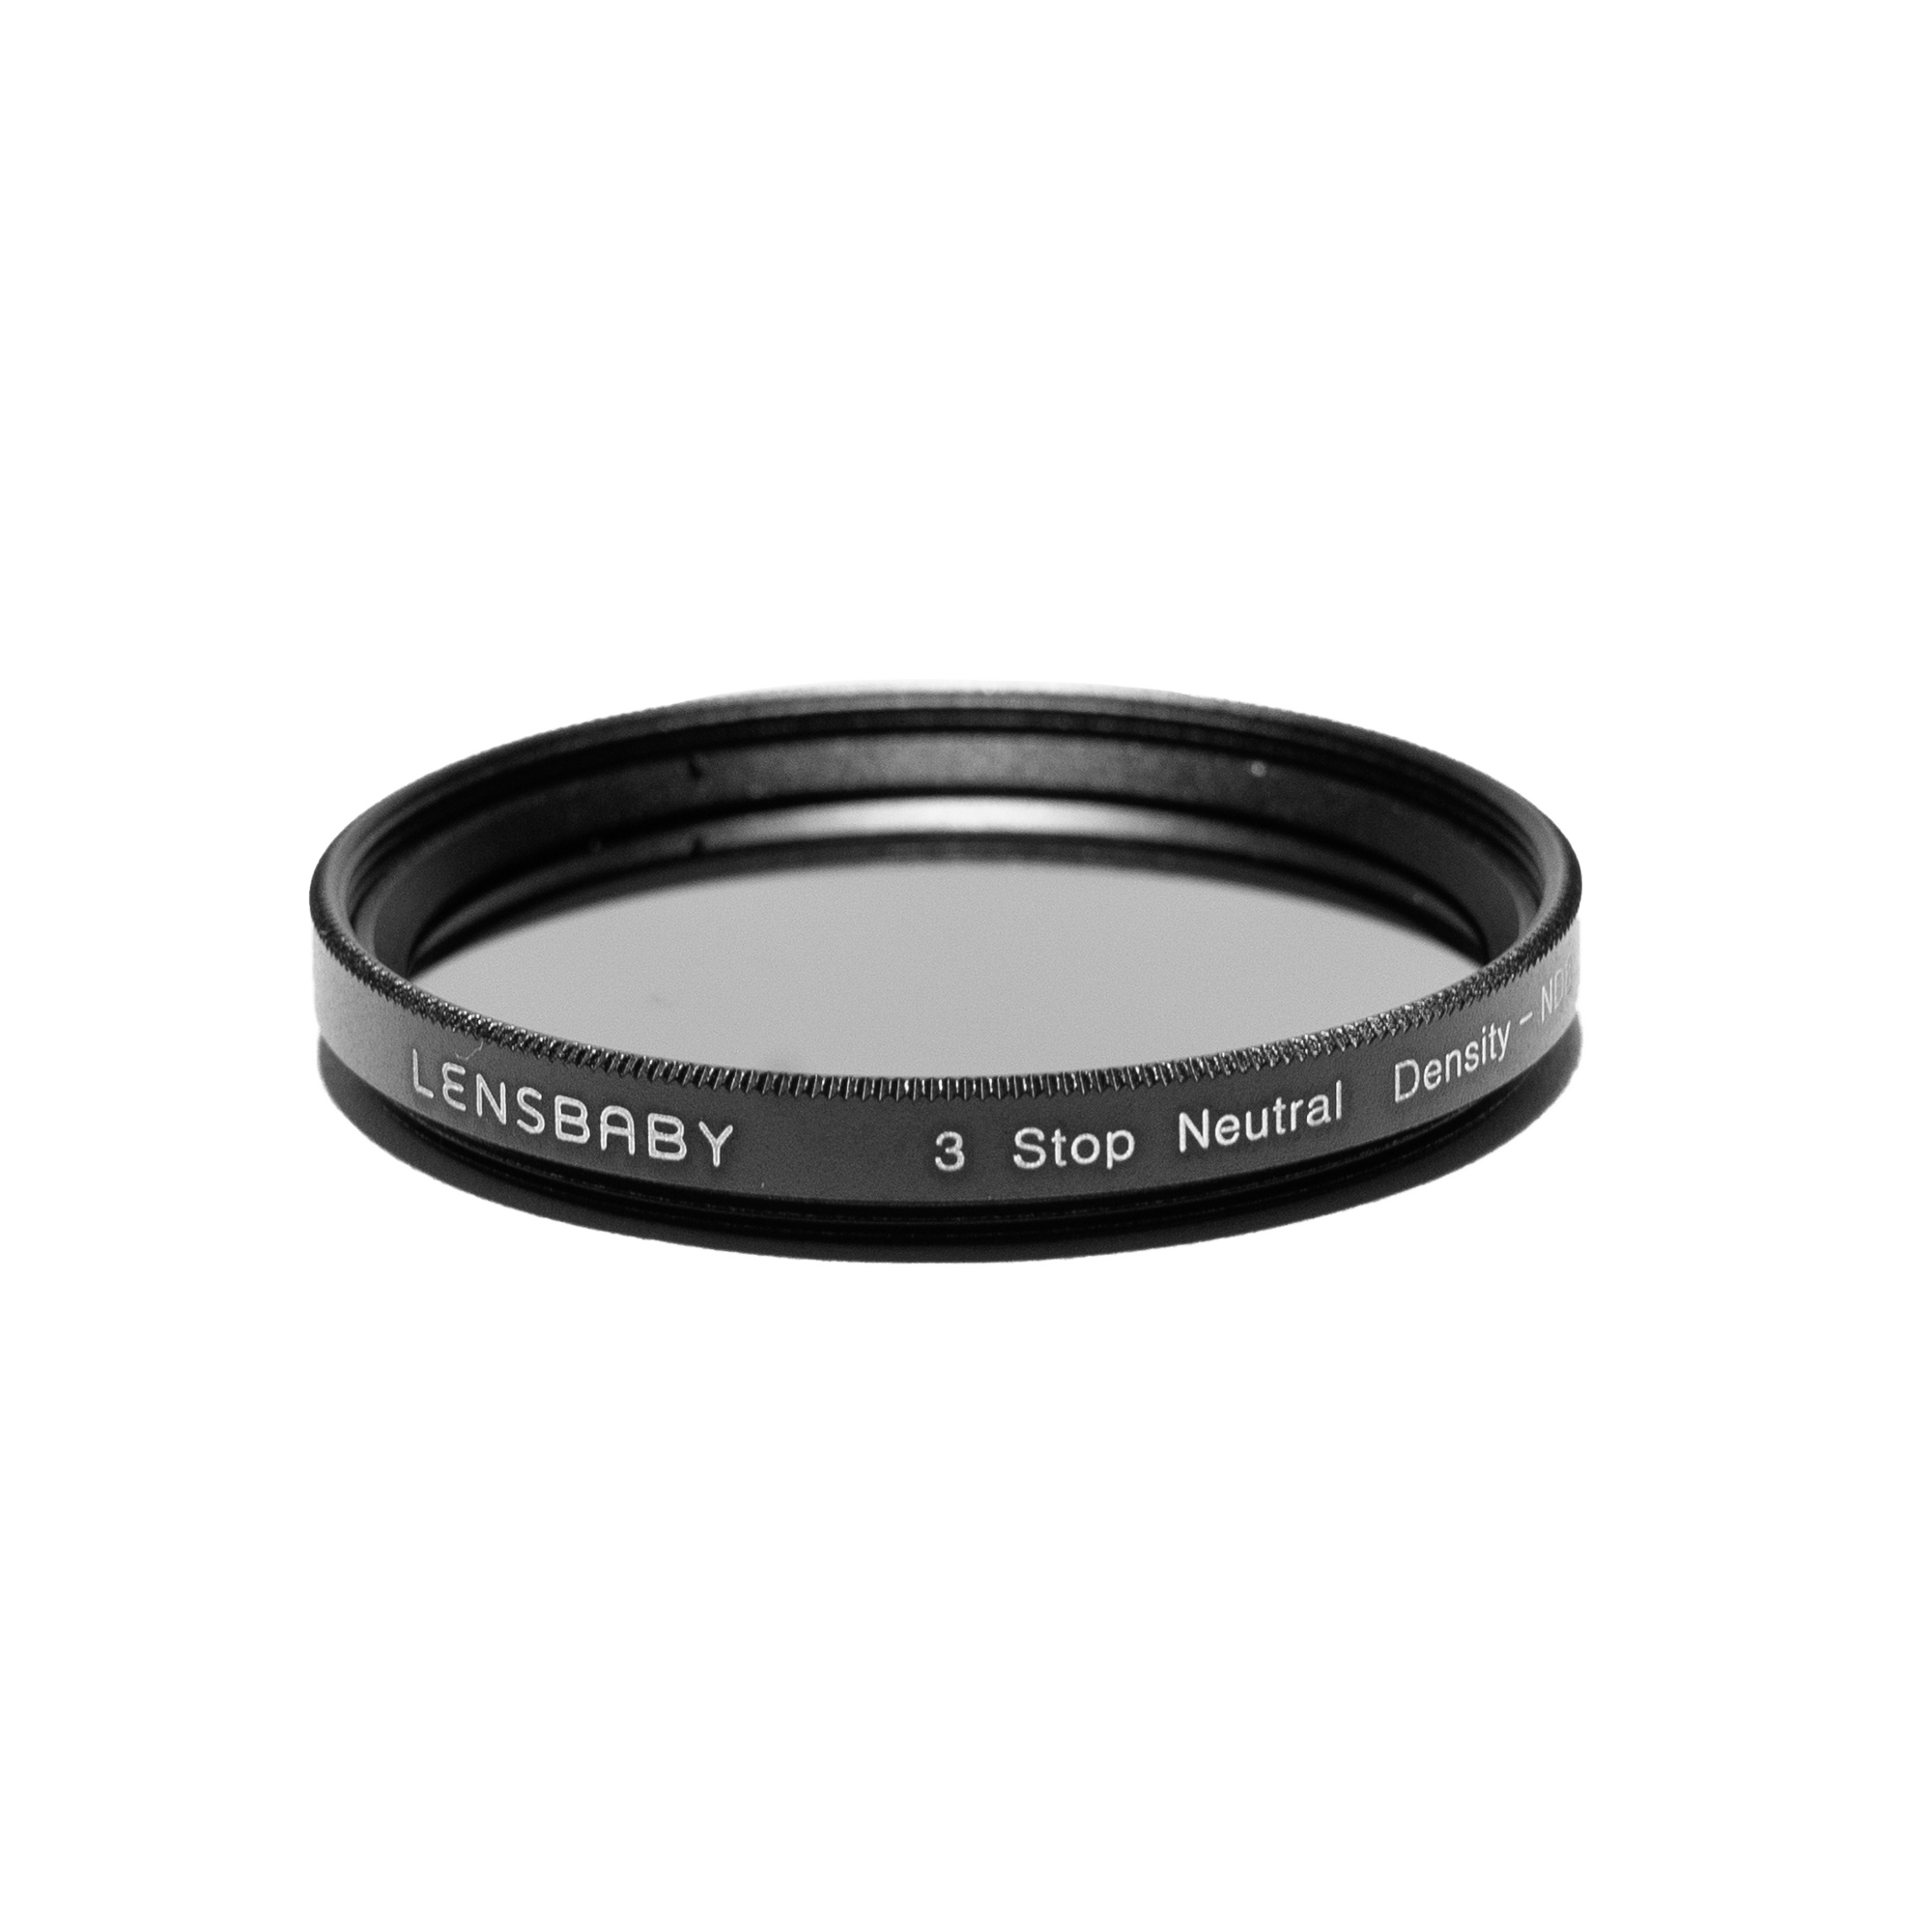 Sweet 22 Kit - Lensbaby Creative Effect Camera Lenses